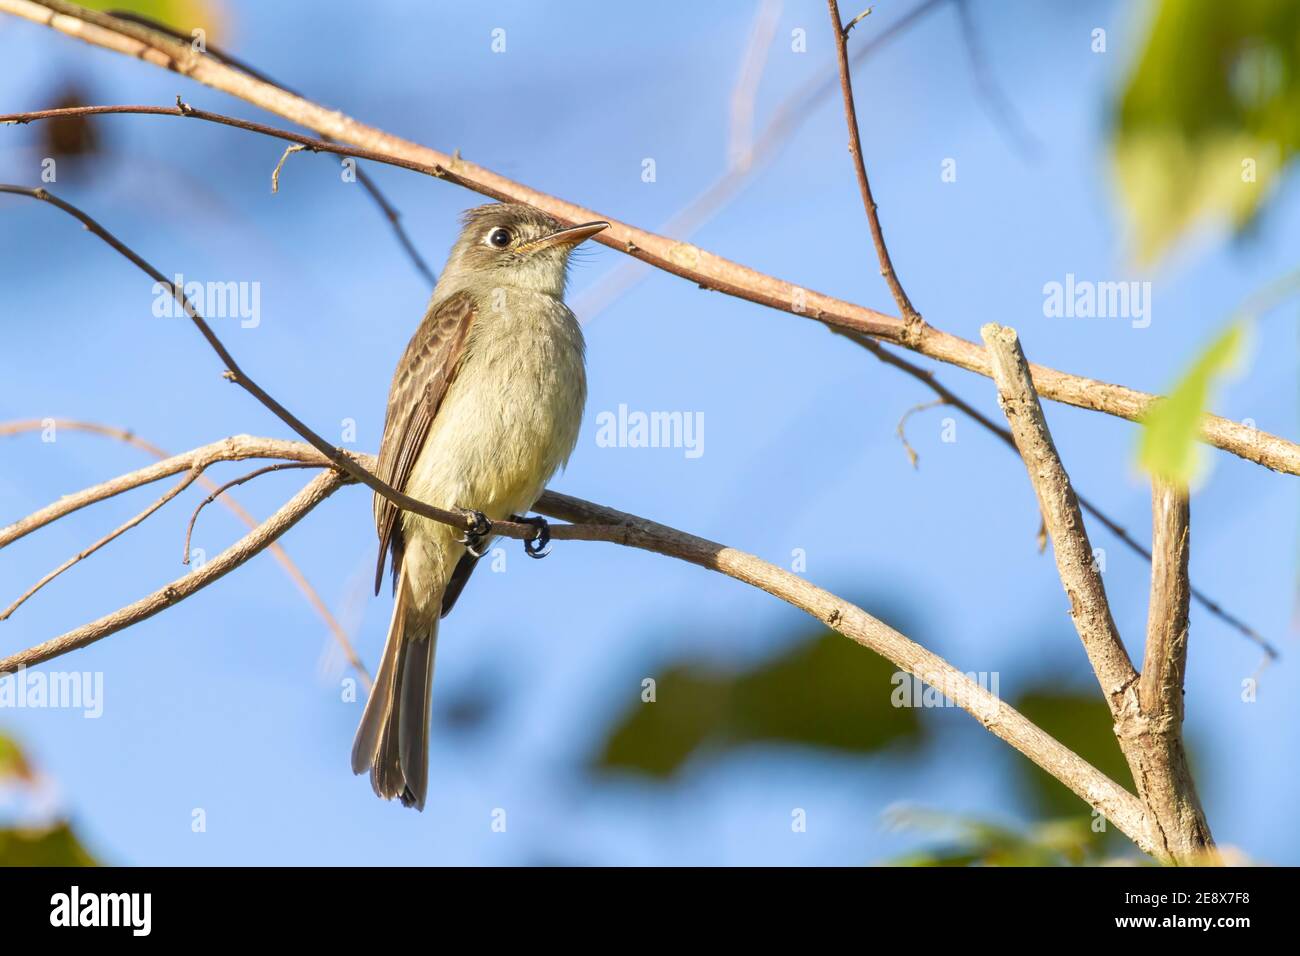 Cuban pewee, Contopus caribaeus, single bird perched on branch of shrub, Cuba Stock Photo